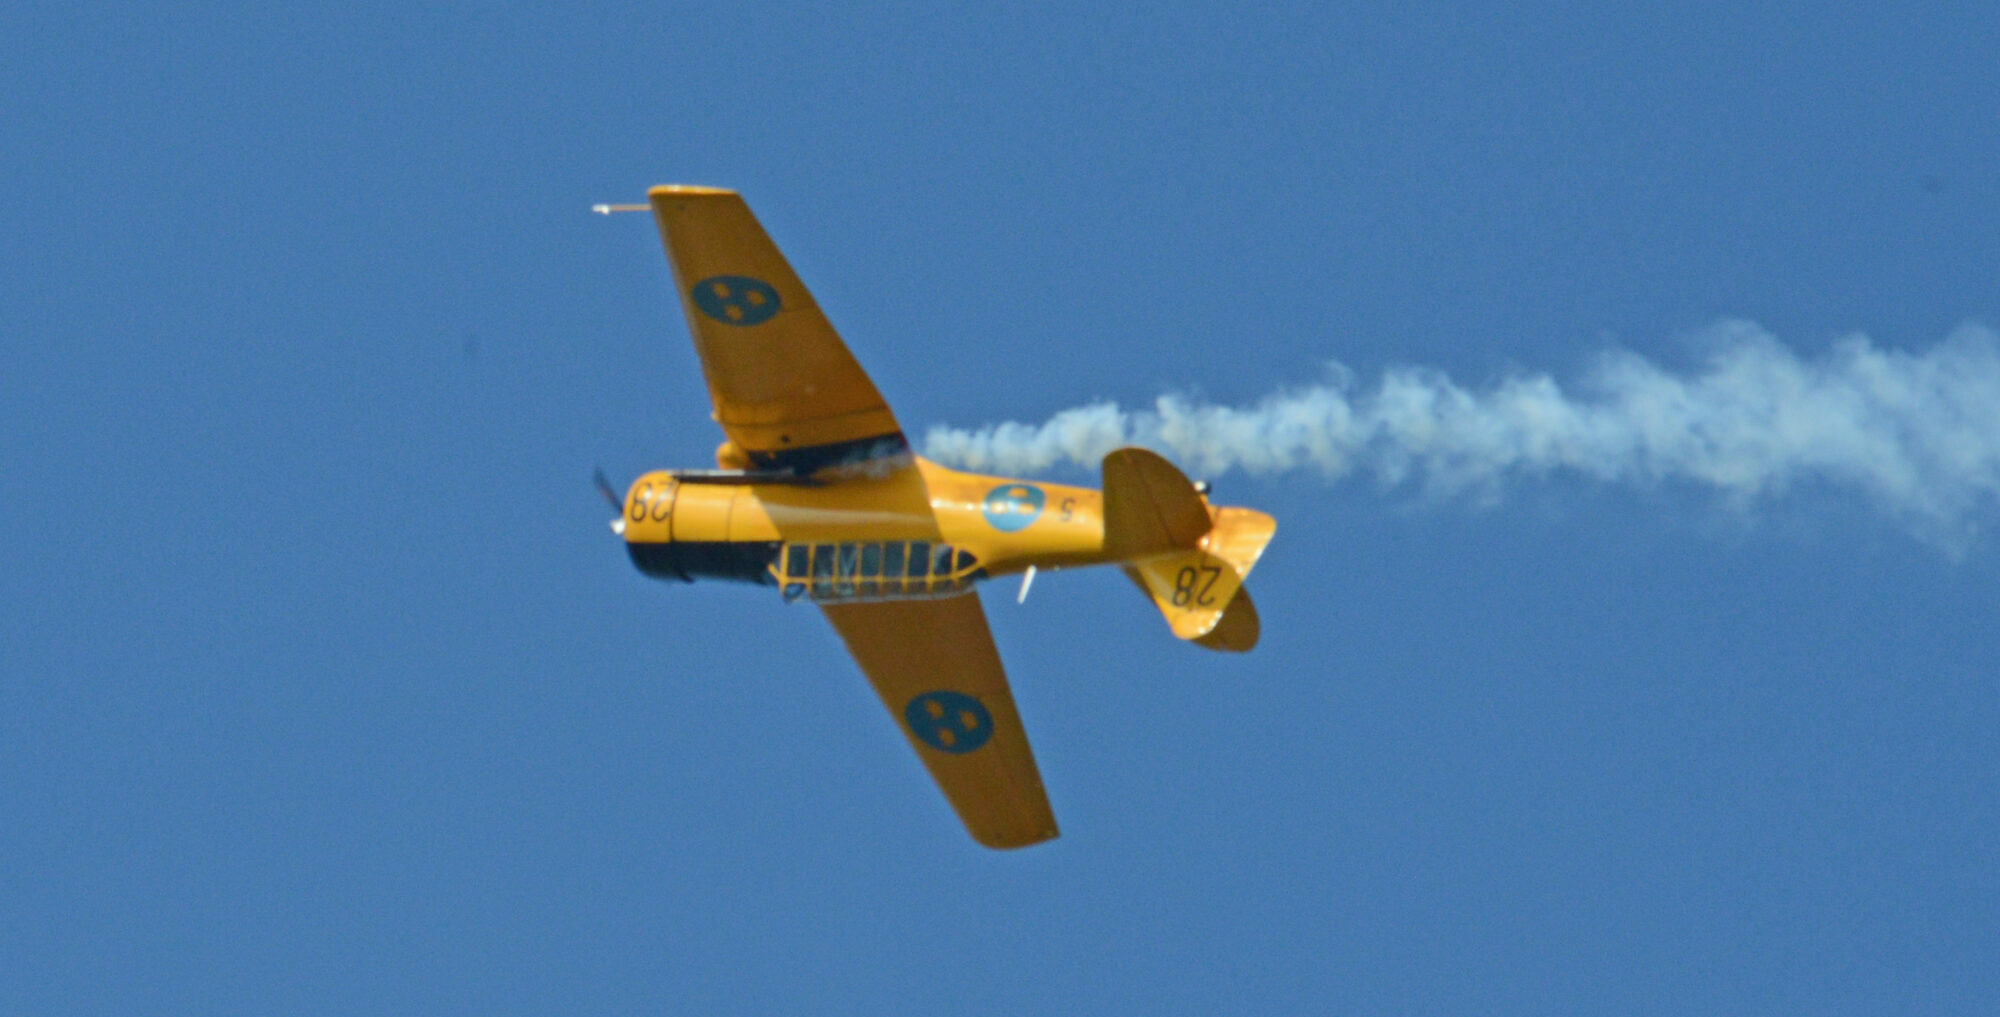 En gul SK16 uppochner i luften med blå himmel bakom